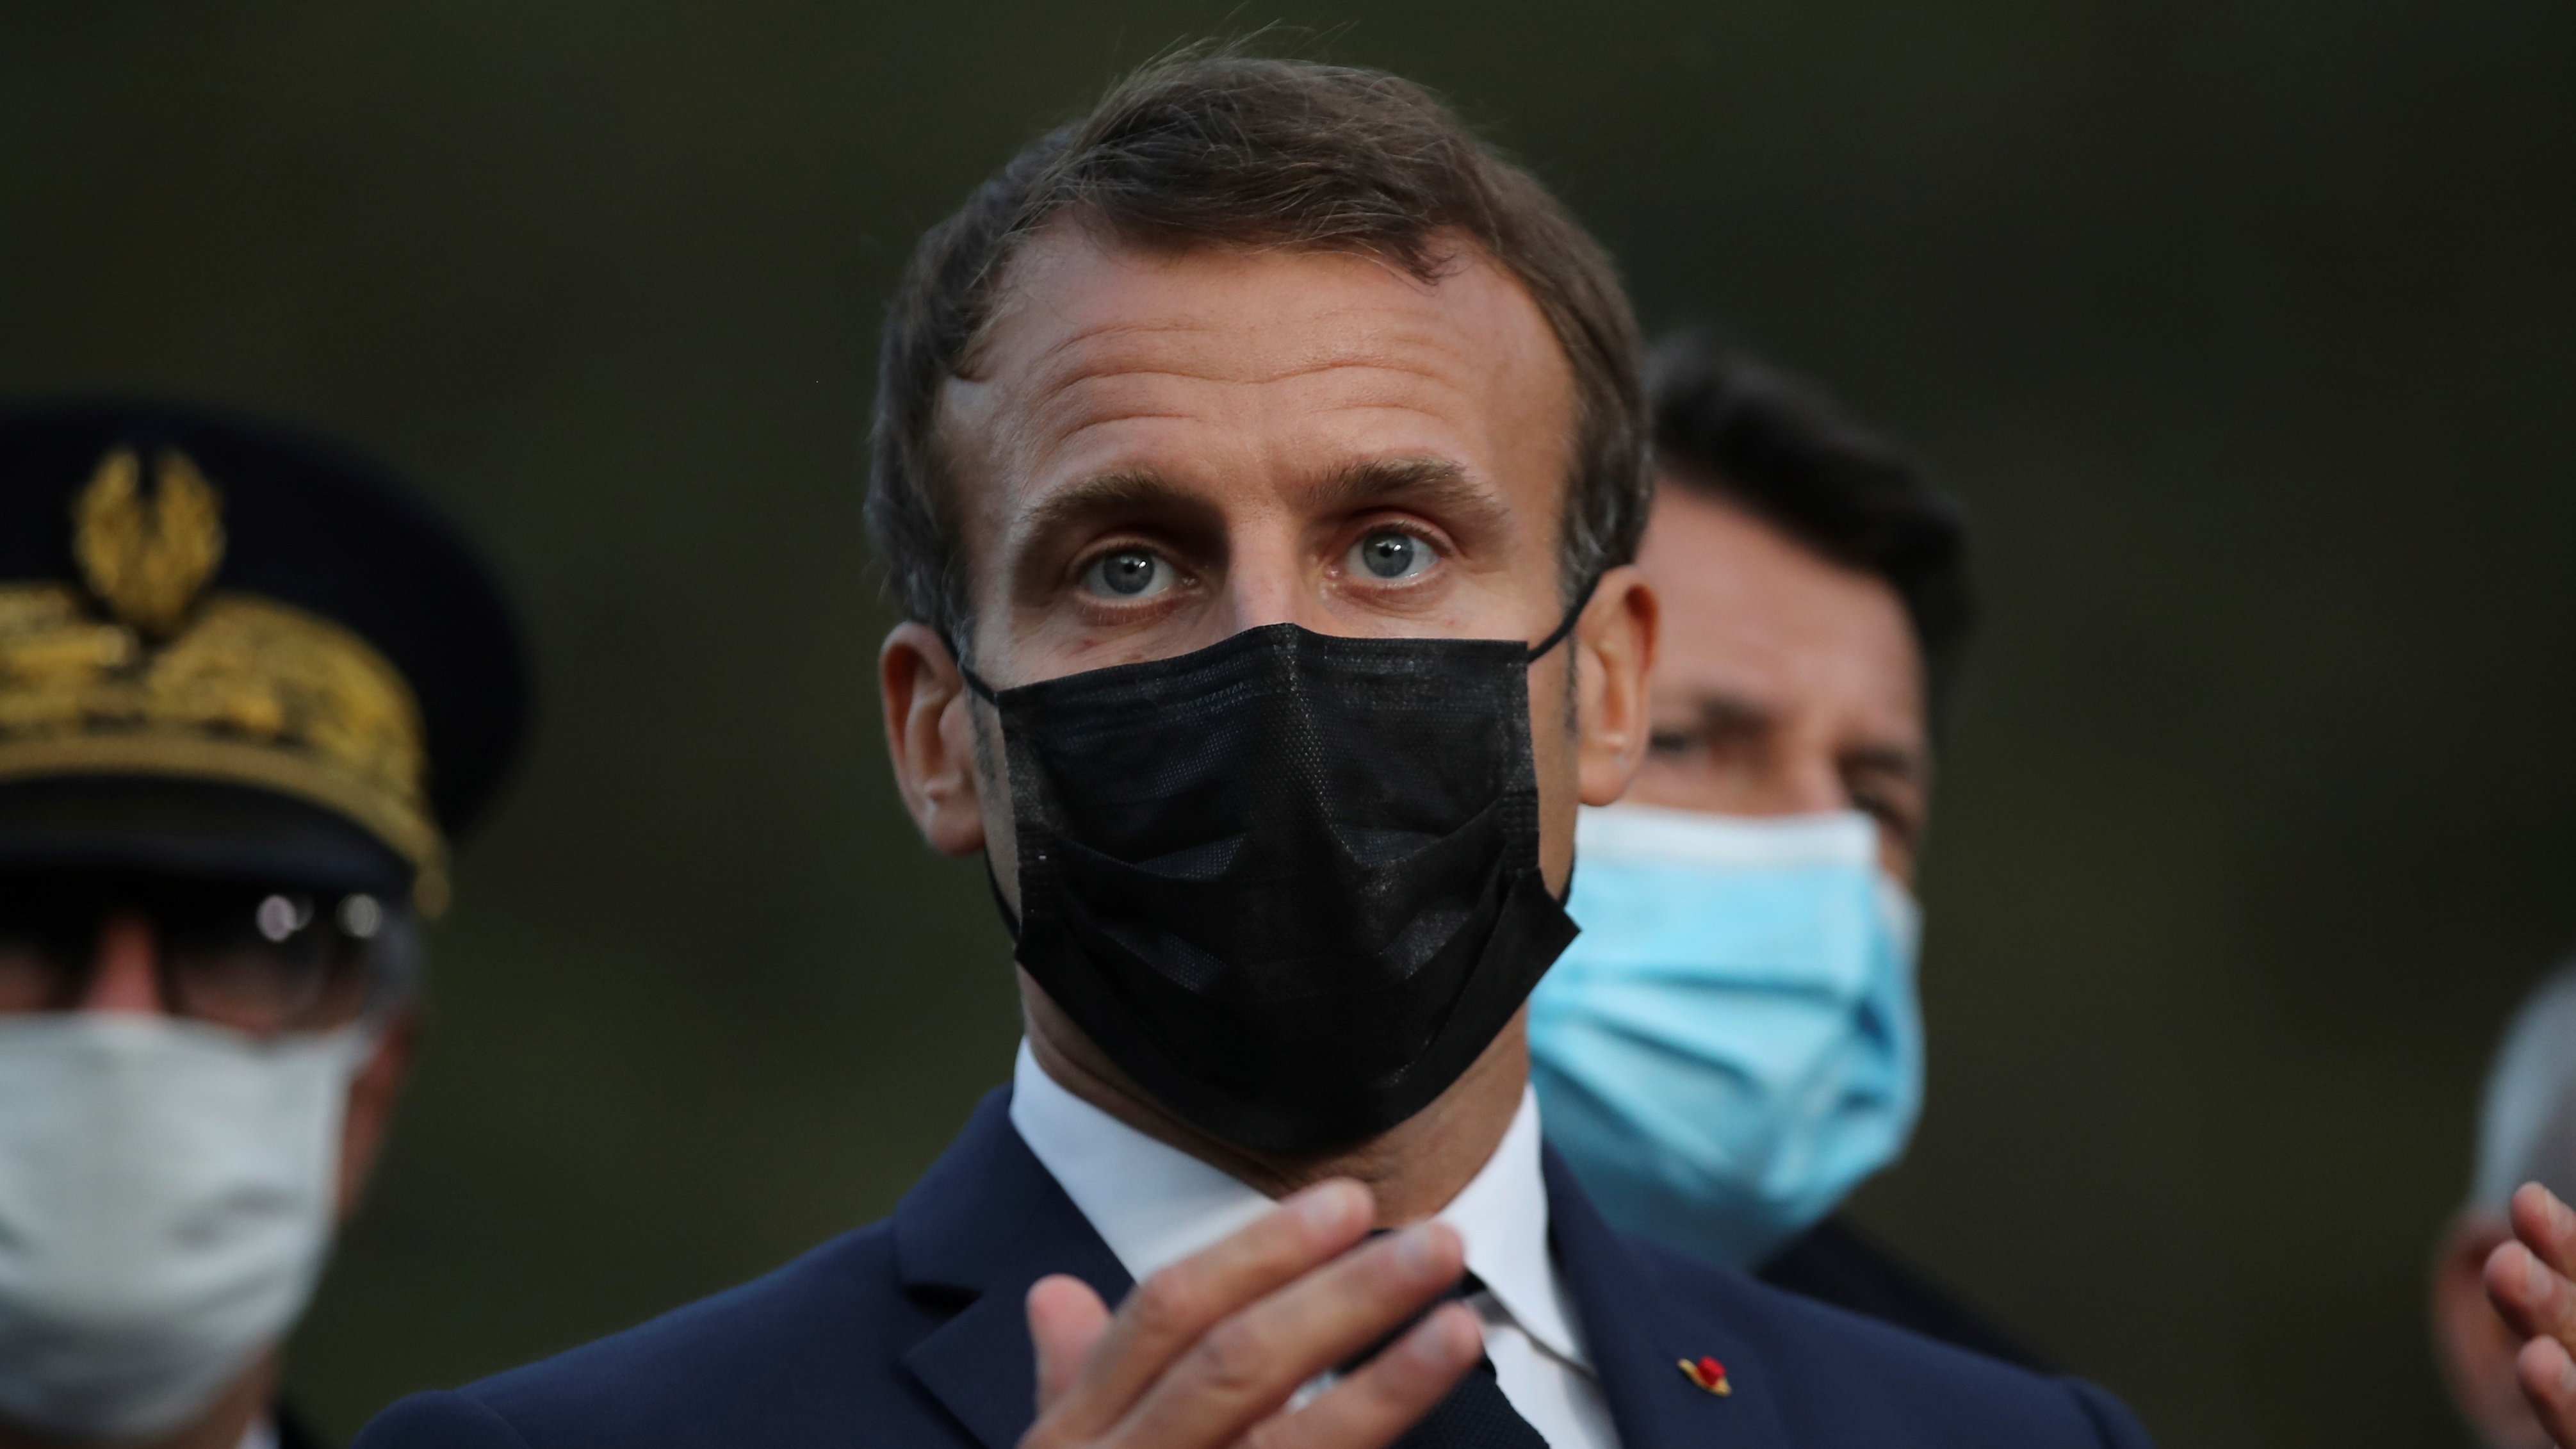 Emmanuel Macron addresses journalists wearing a black face mask/